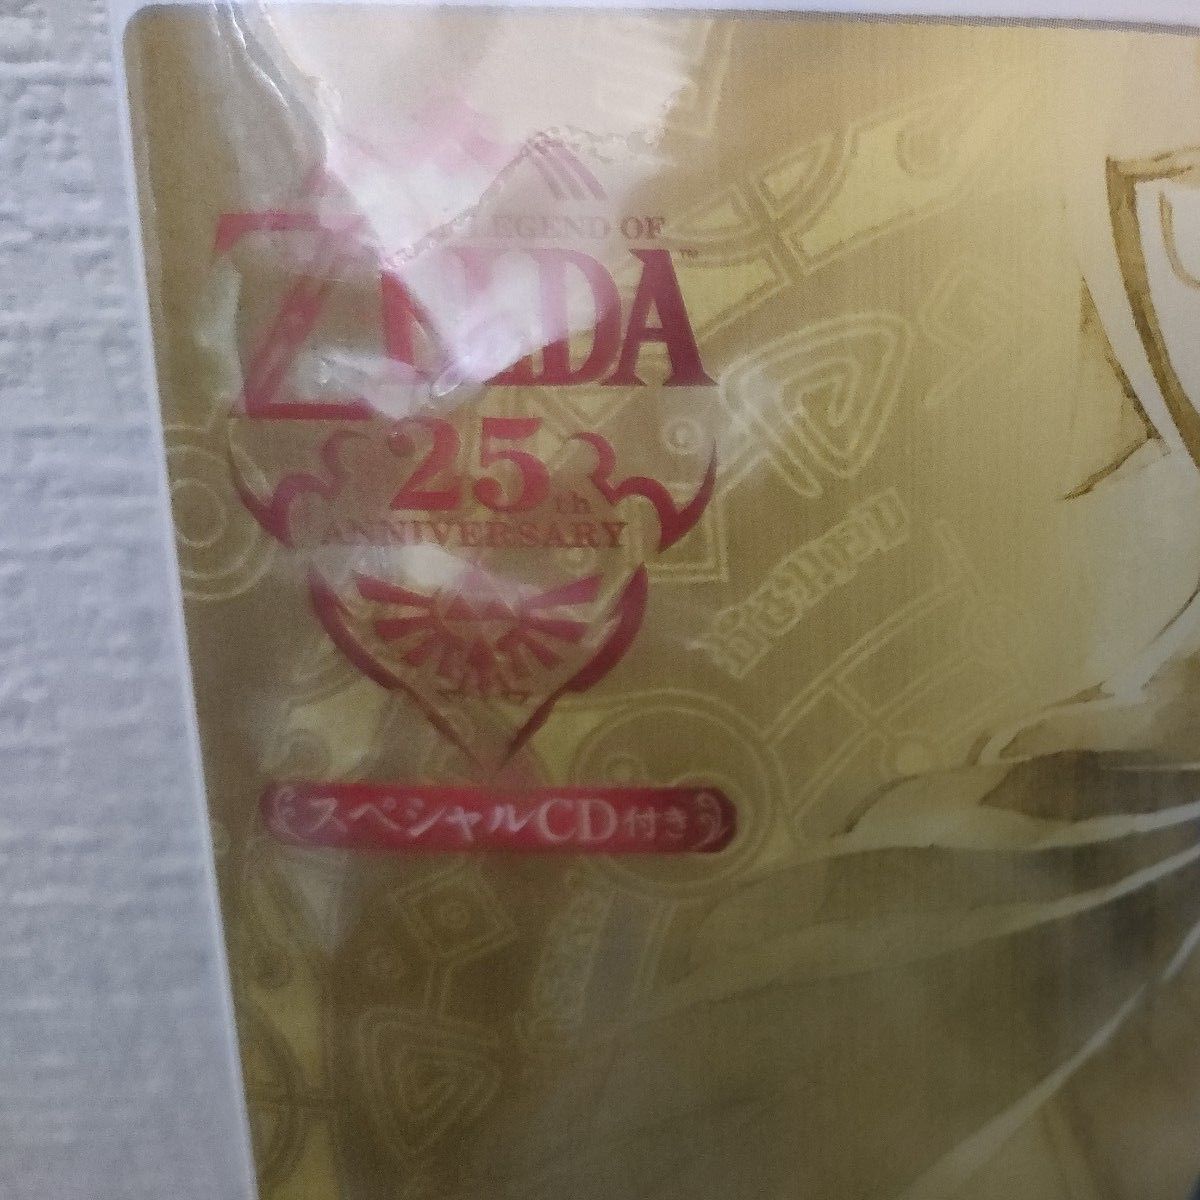 【Wii】 ゼルダの伝説 スカイウォードソード [スペシャルCD付き］新品未開封